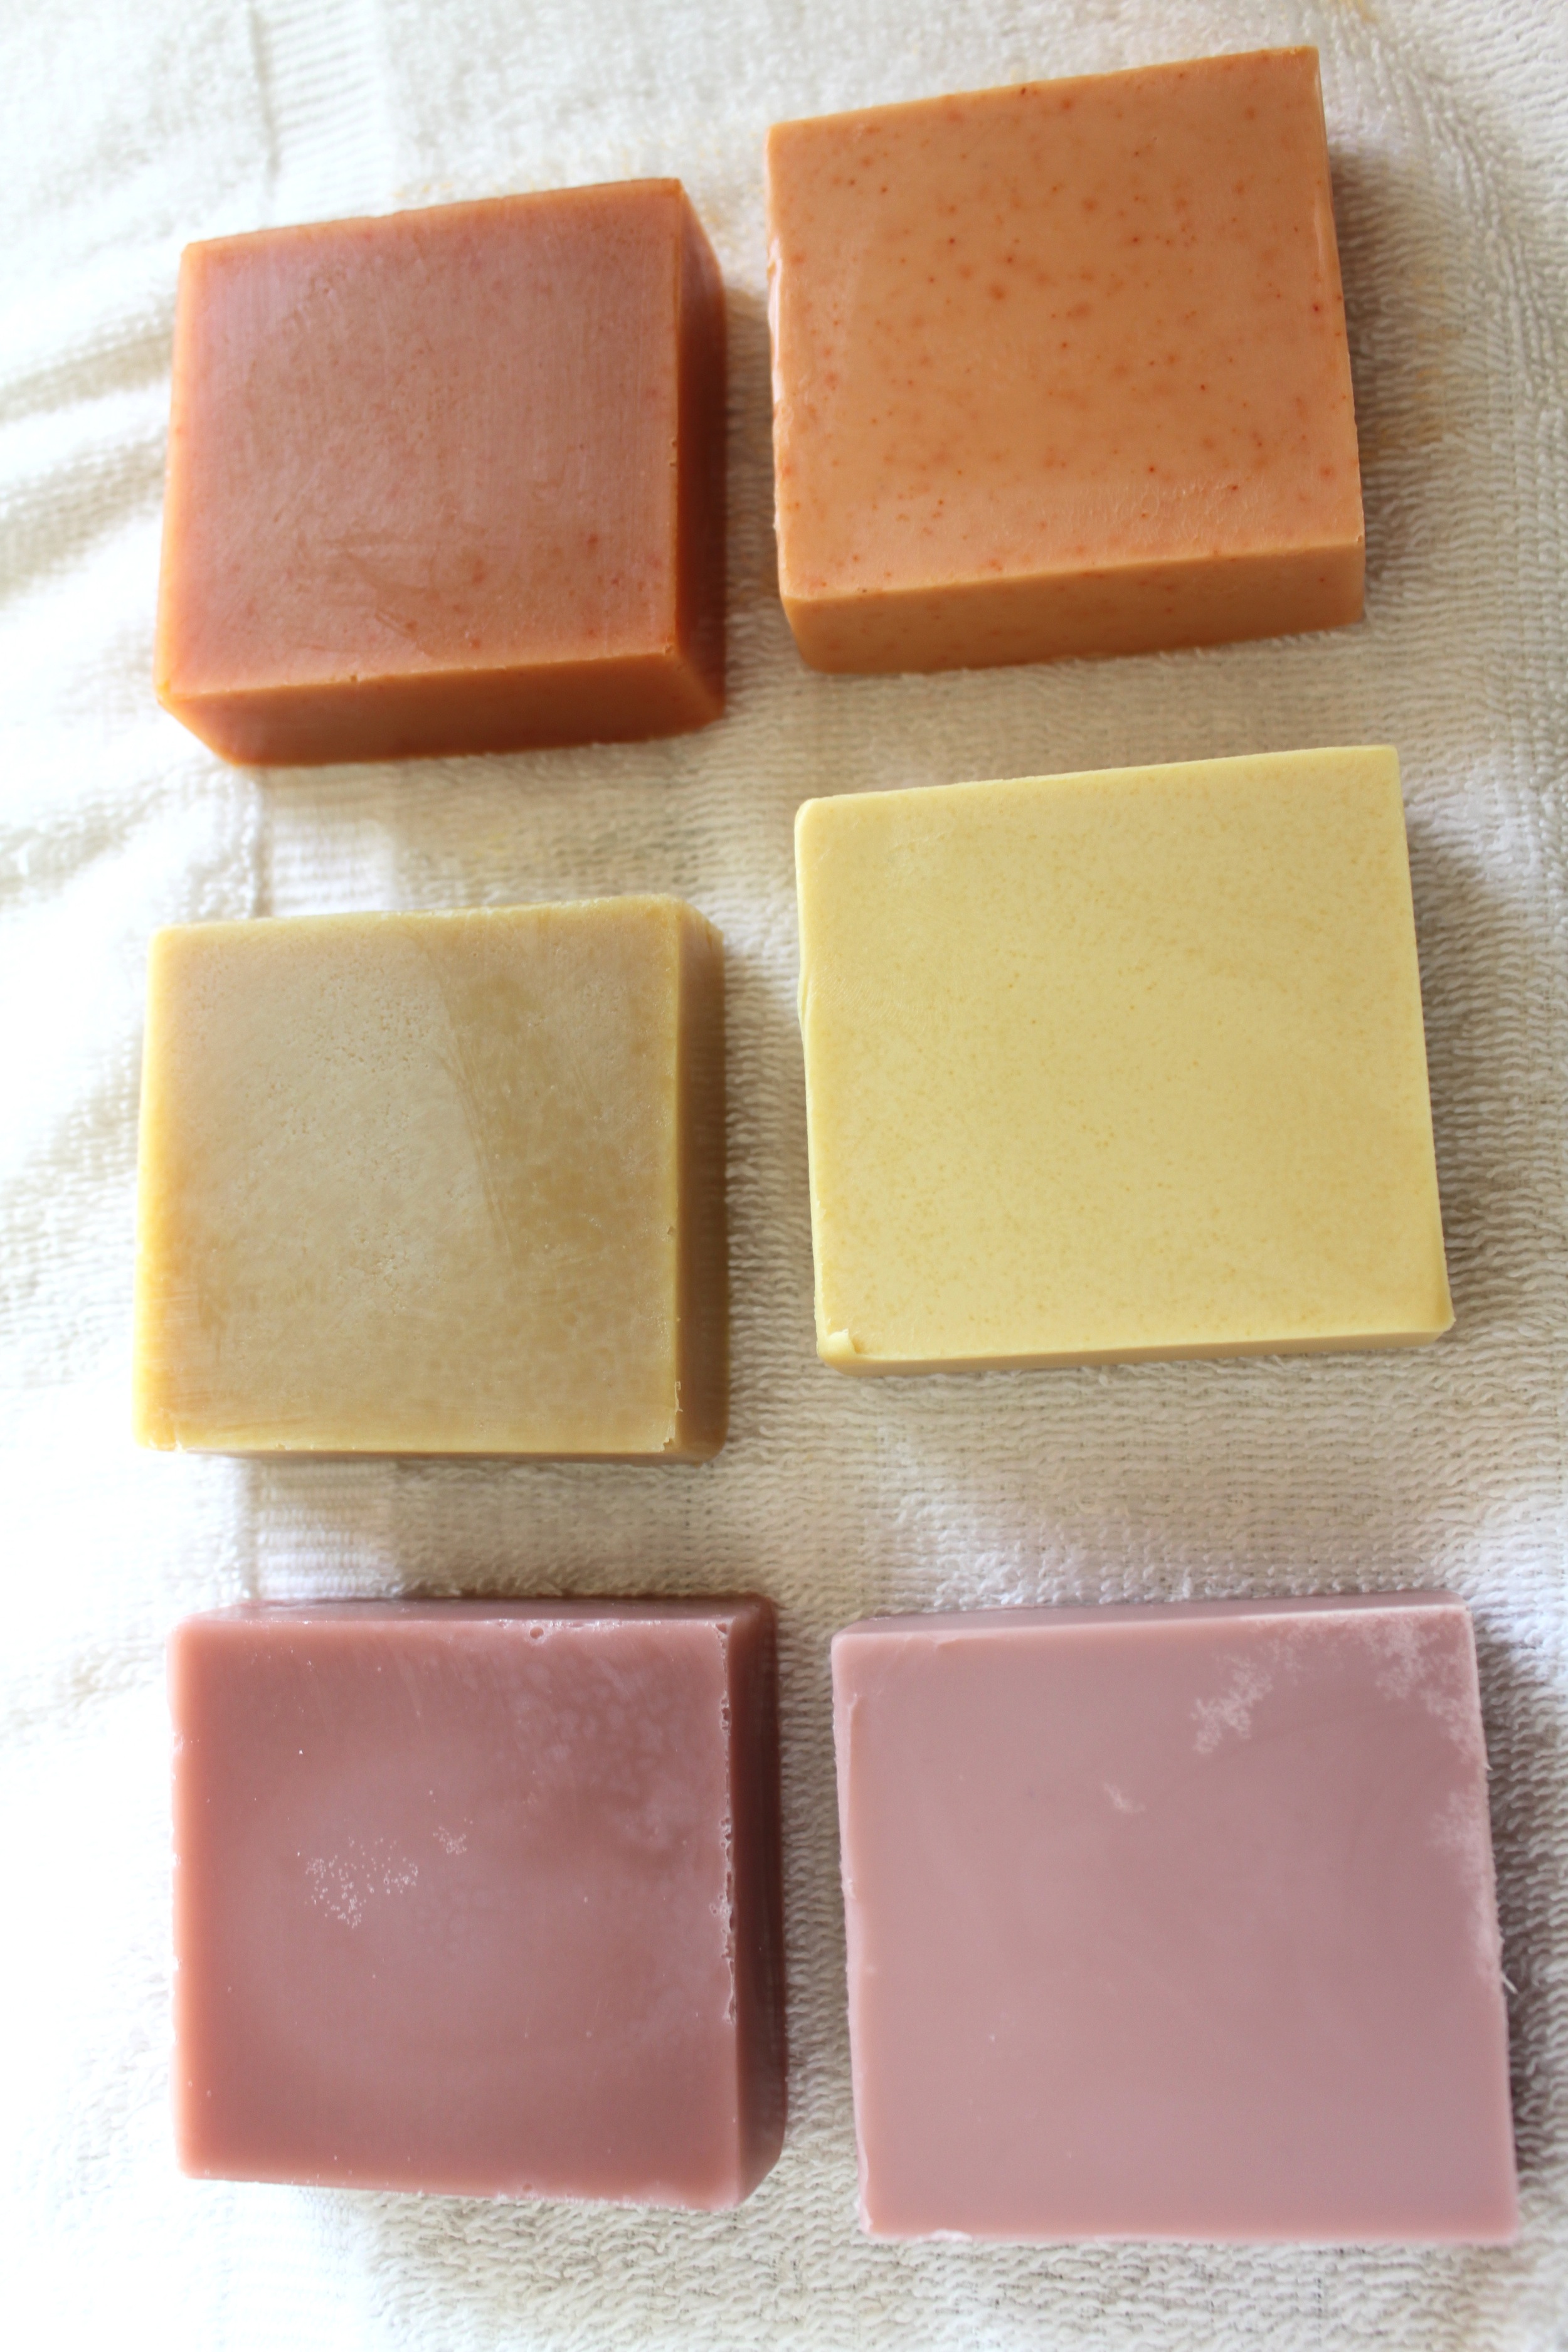 Testing Natural Green Colorants in Cold Process Soap – Flora & Pomona